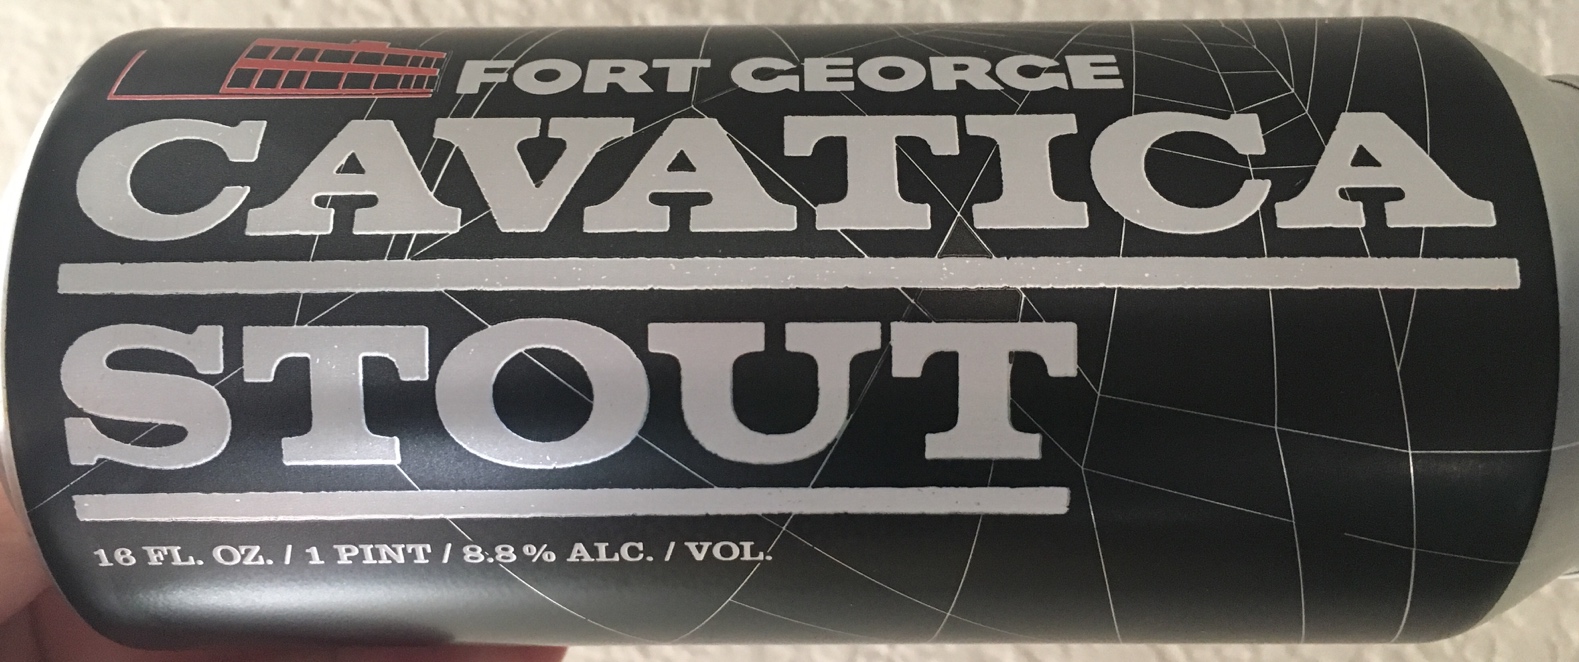 Fort George Brewing | Cavatica Stout